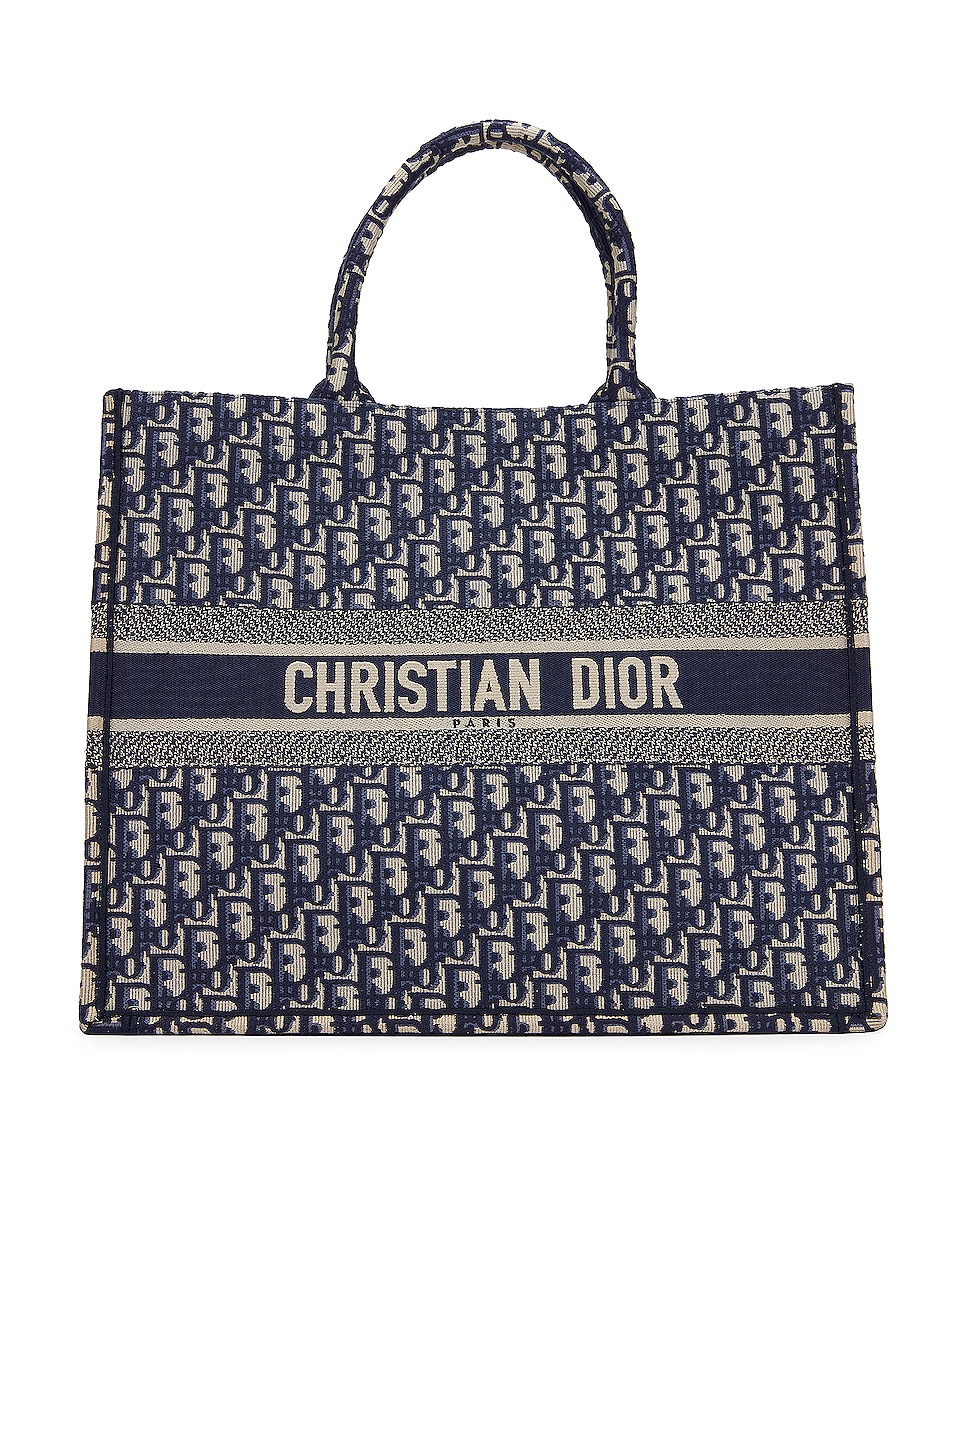 DIOR Christian Dior 2020 Pre-Owned Bobby Crossbody Bag - White for Women